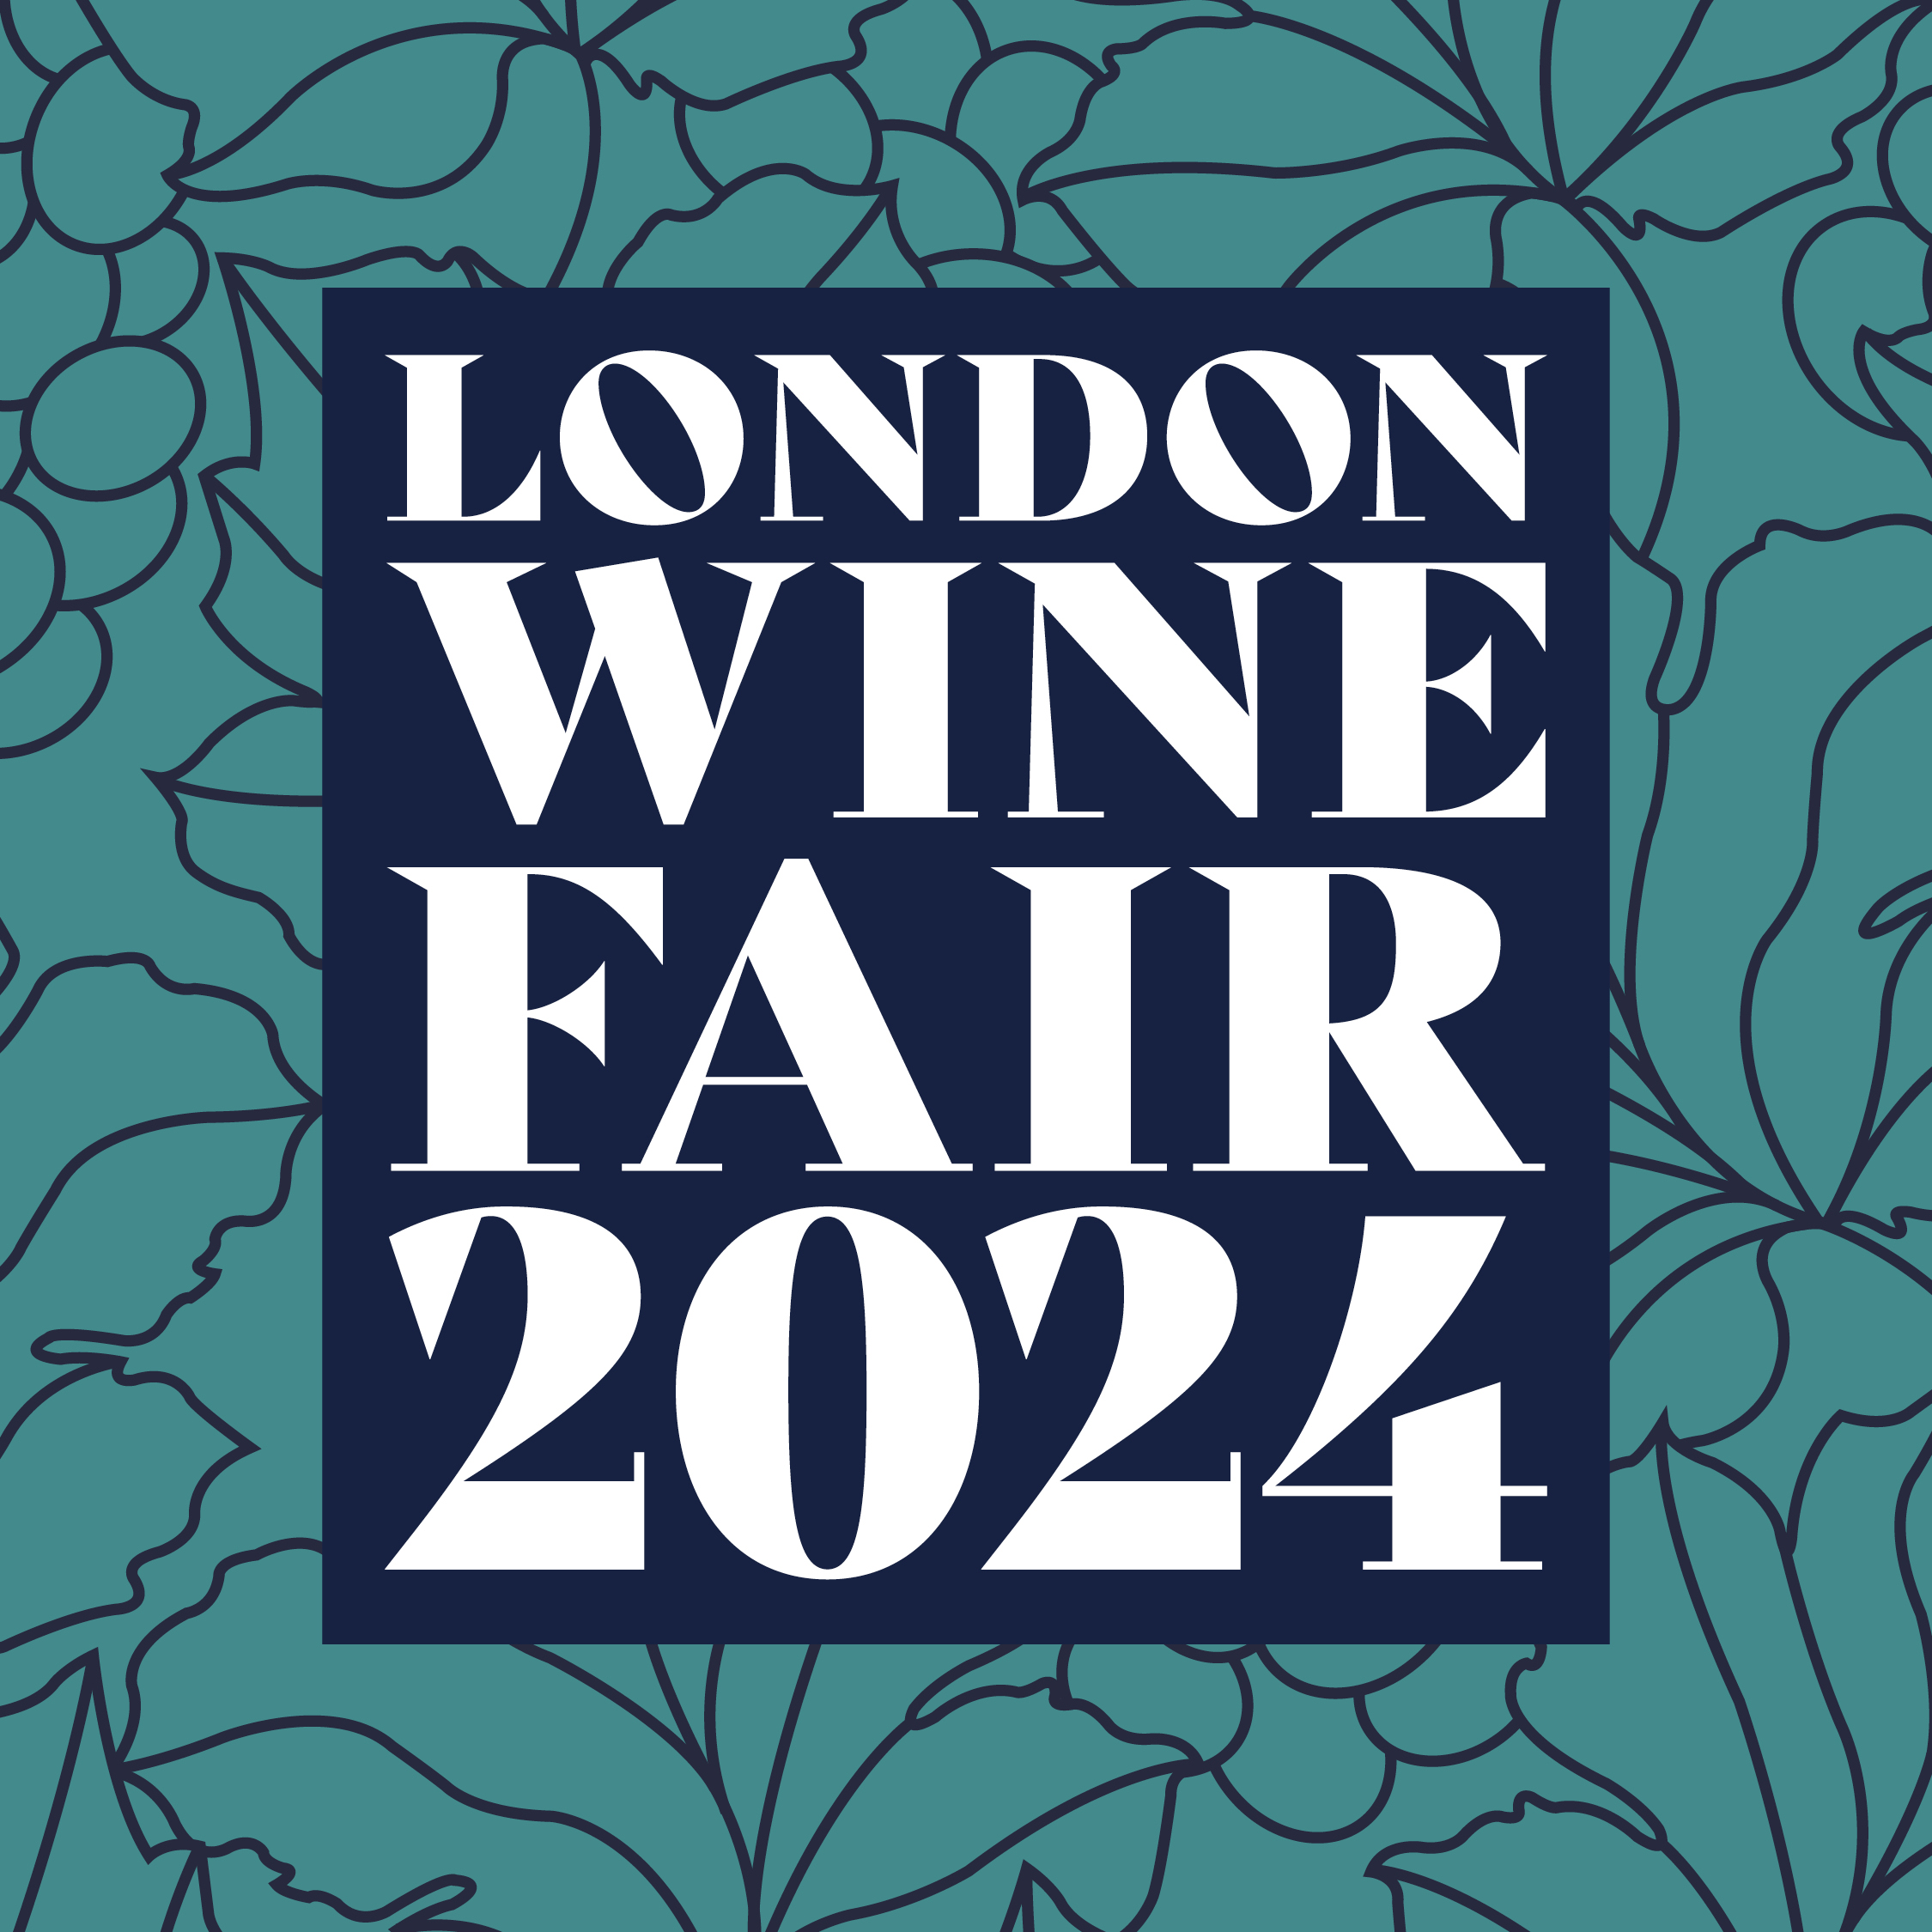 London Wine Fair 2024: Η υπεροχή του ελληνικού κρασιού και φέτος παρούσα